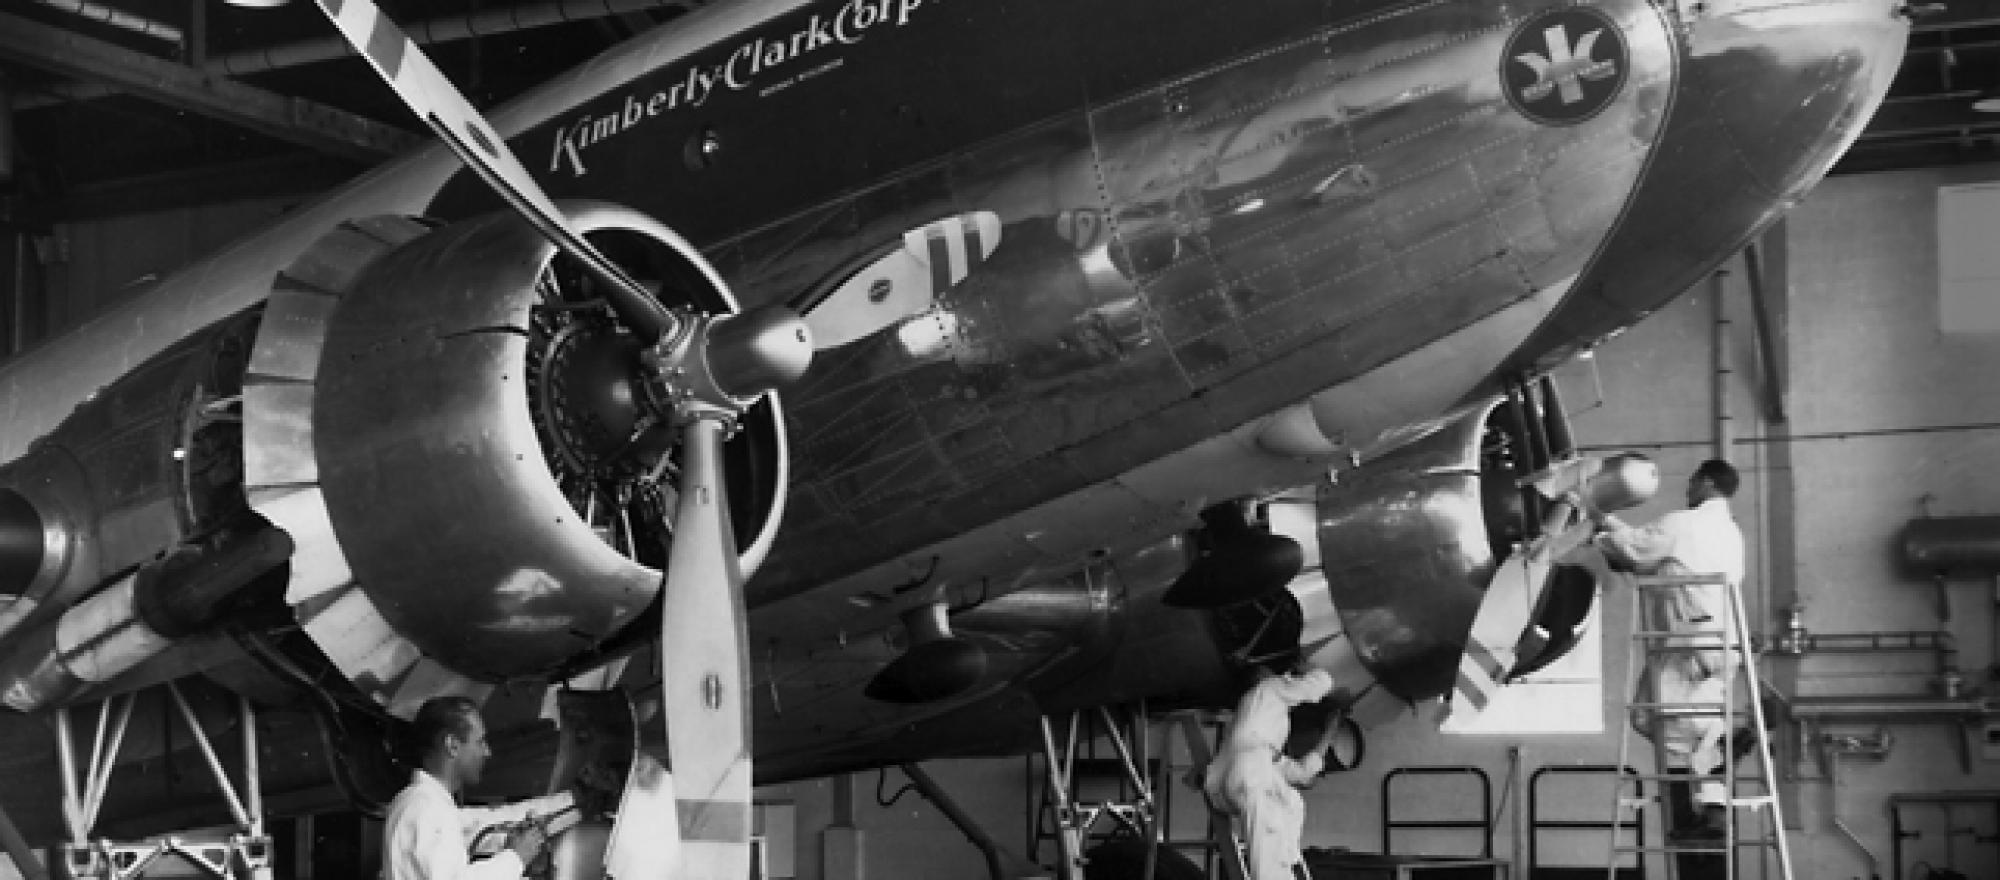 Kimberly-Clark operated the iconic douglas DC-3.